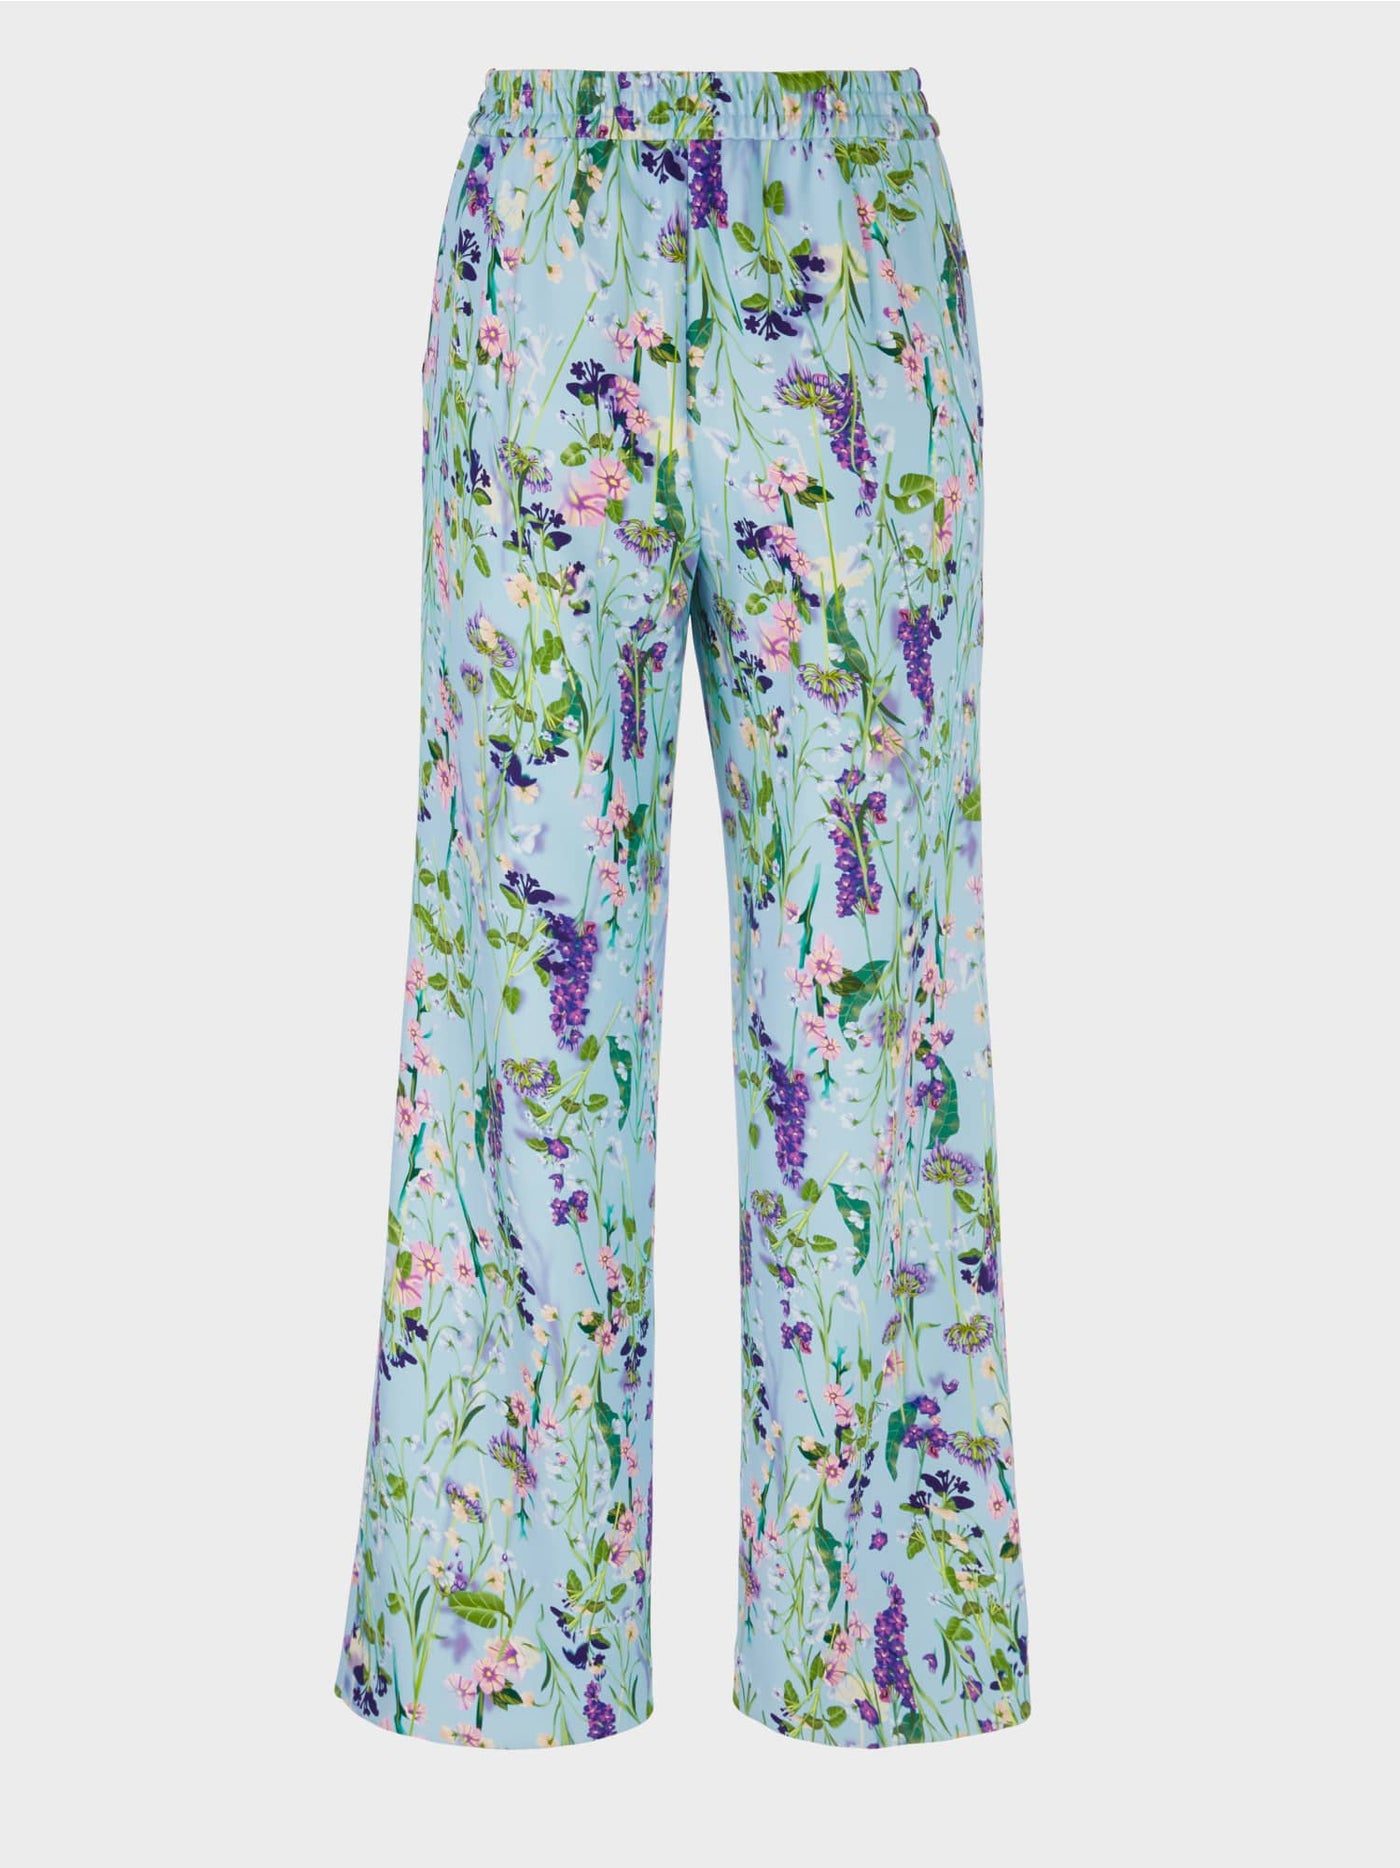 Marc Cain Blue WASHINGTON pants in floral design